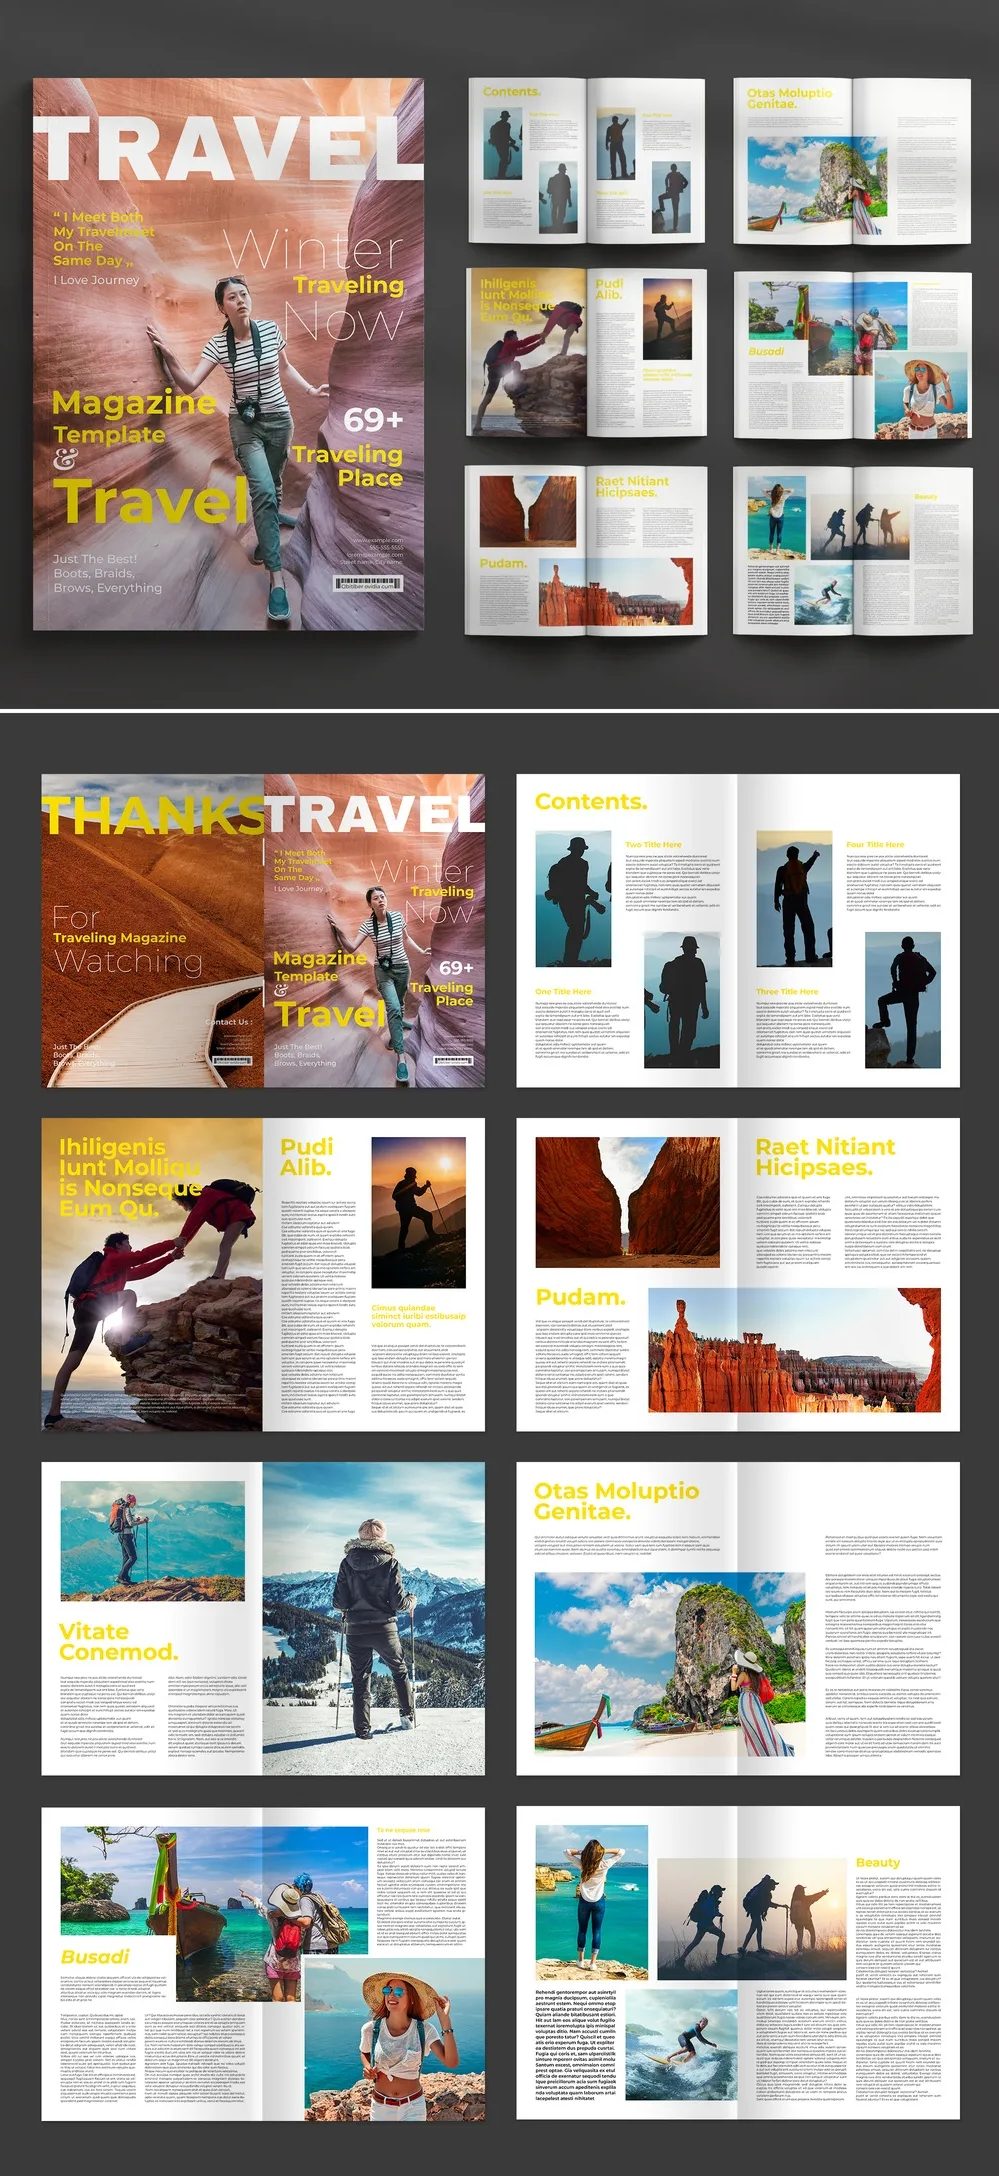 Adobestock - Travel Magazine Template 723727005